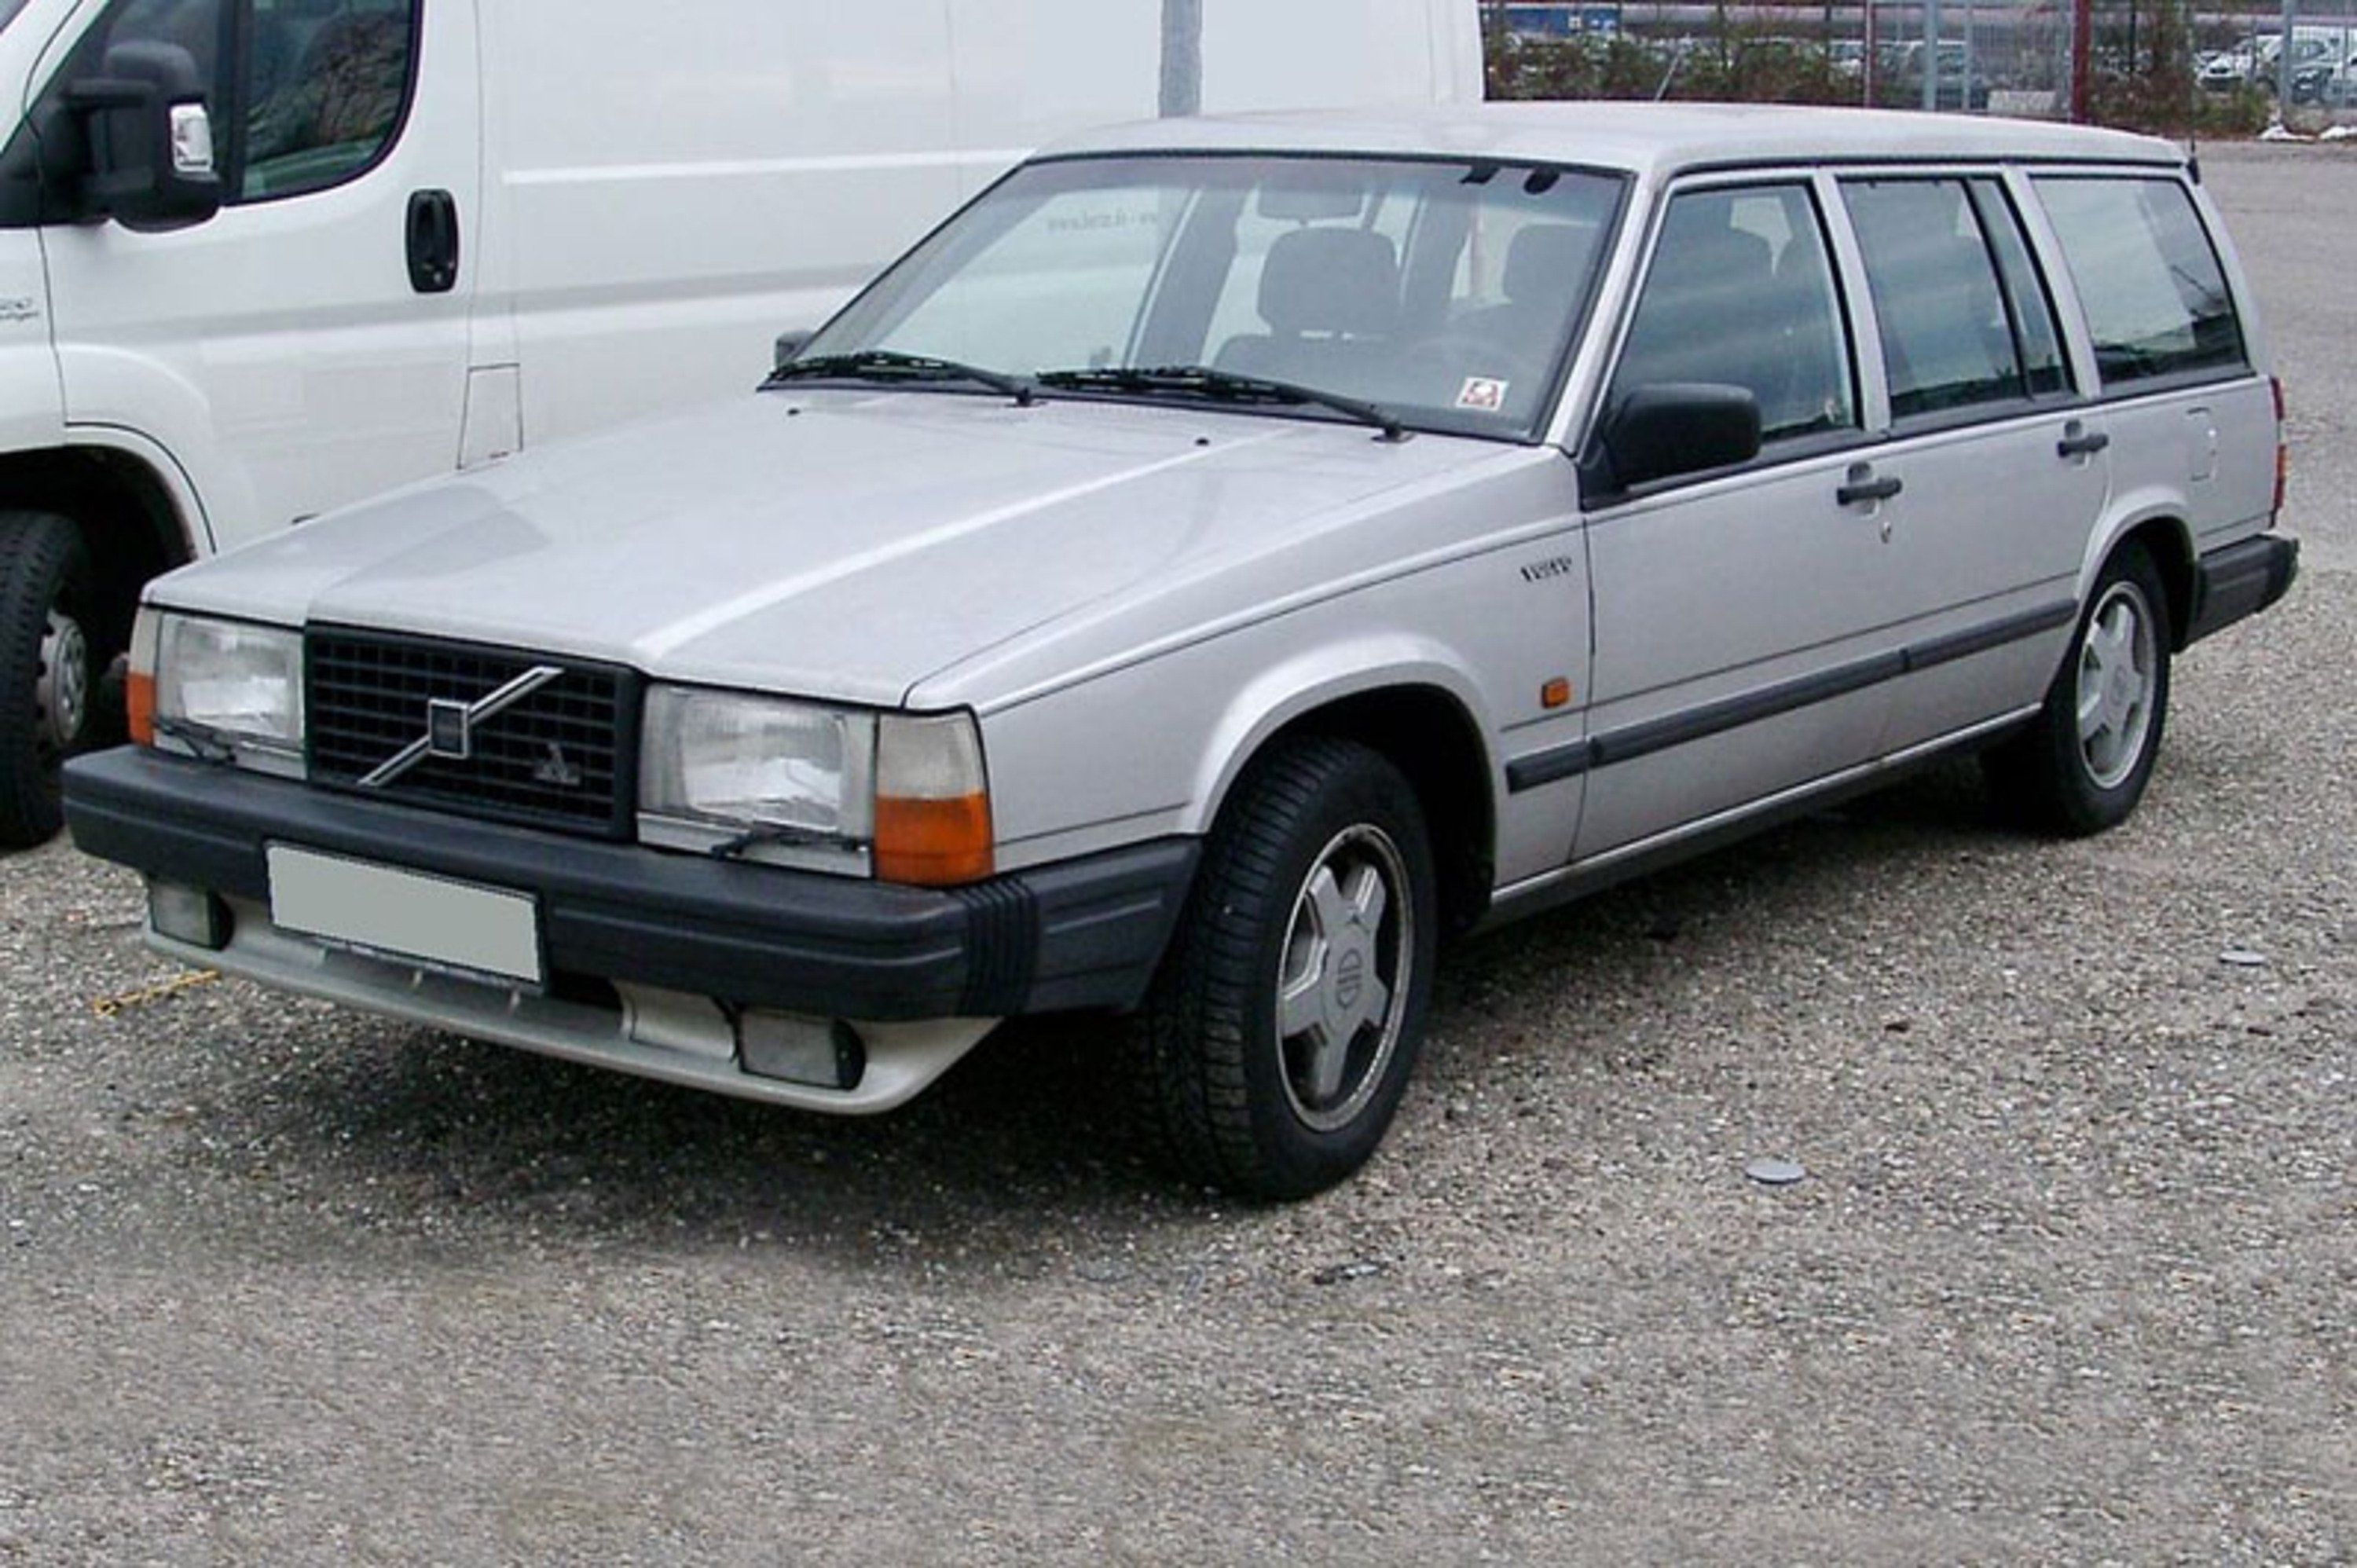 Volvo 740 (1985-92)